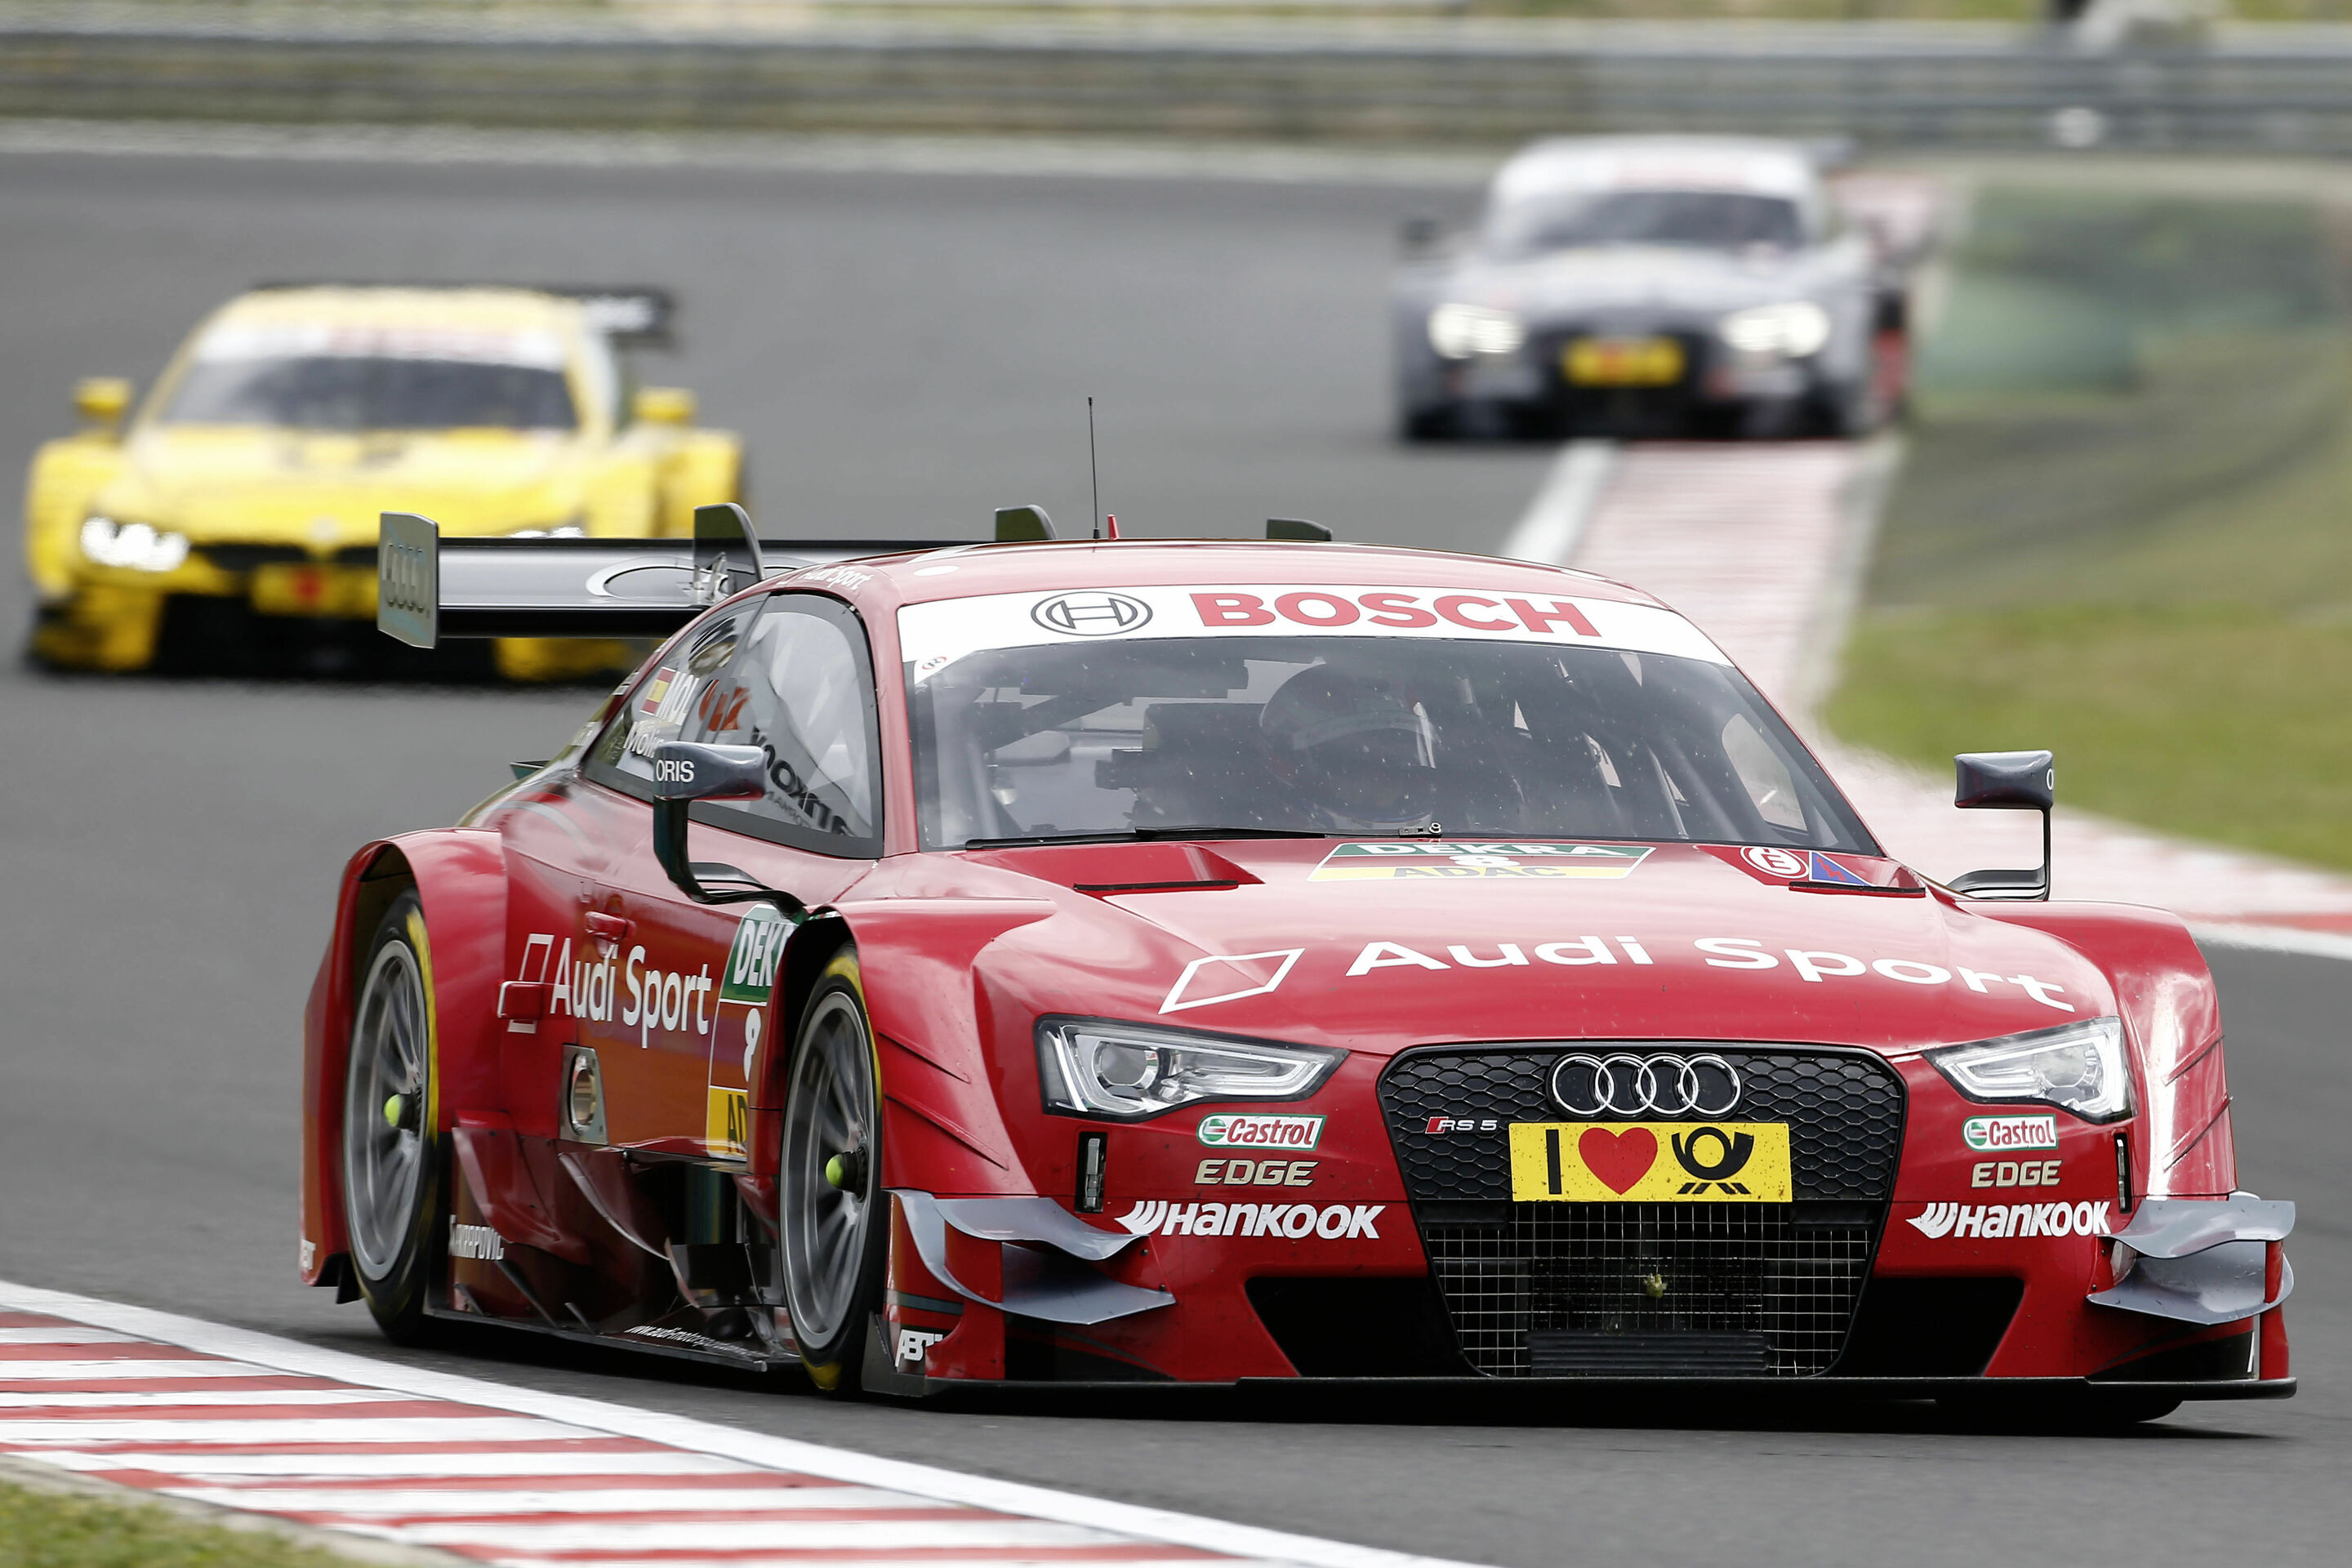 Audi set on winning at the Norisring